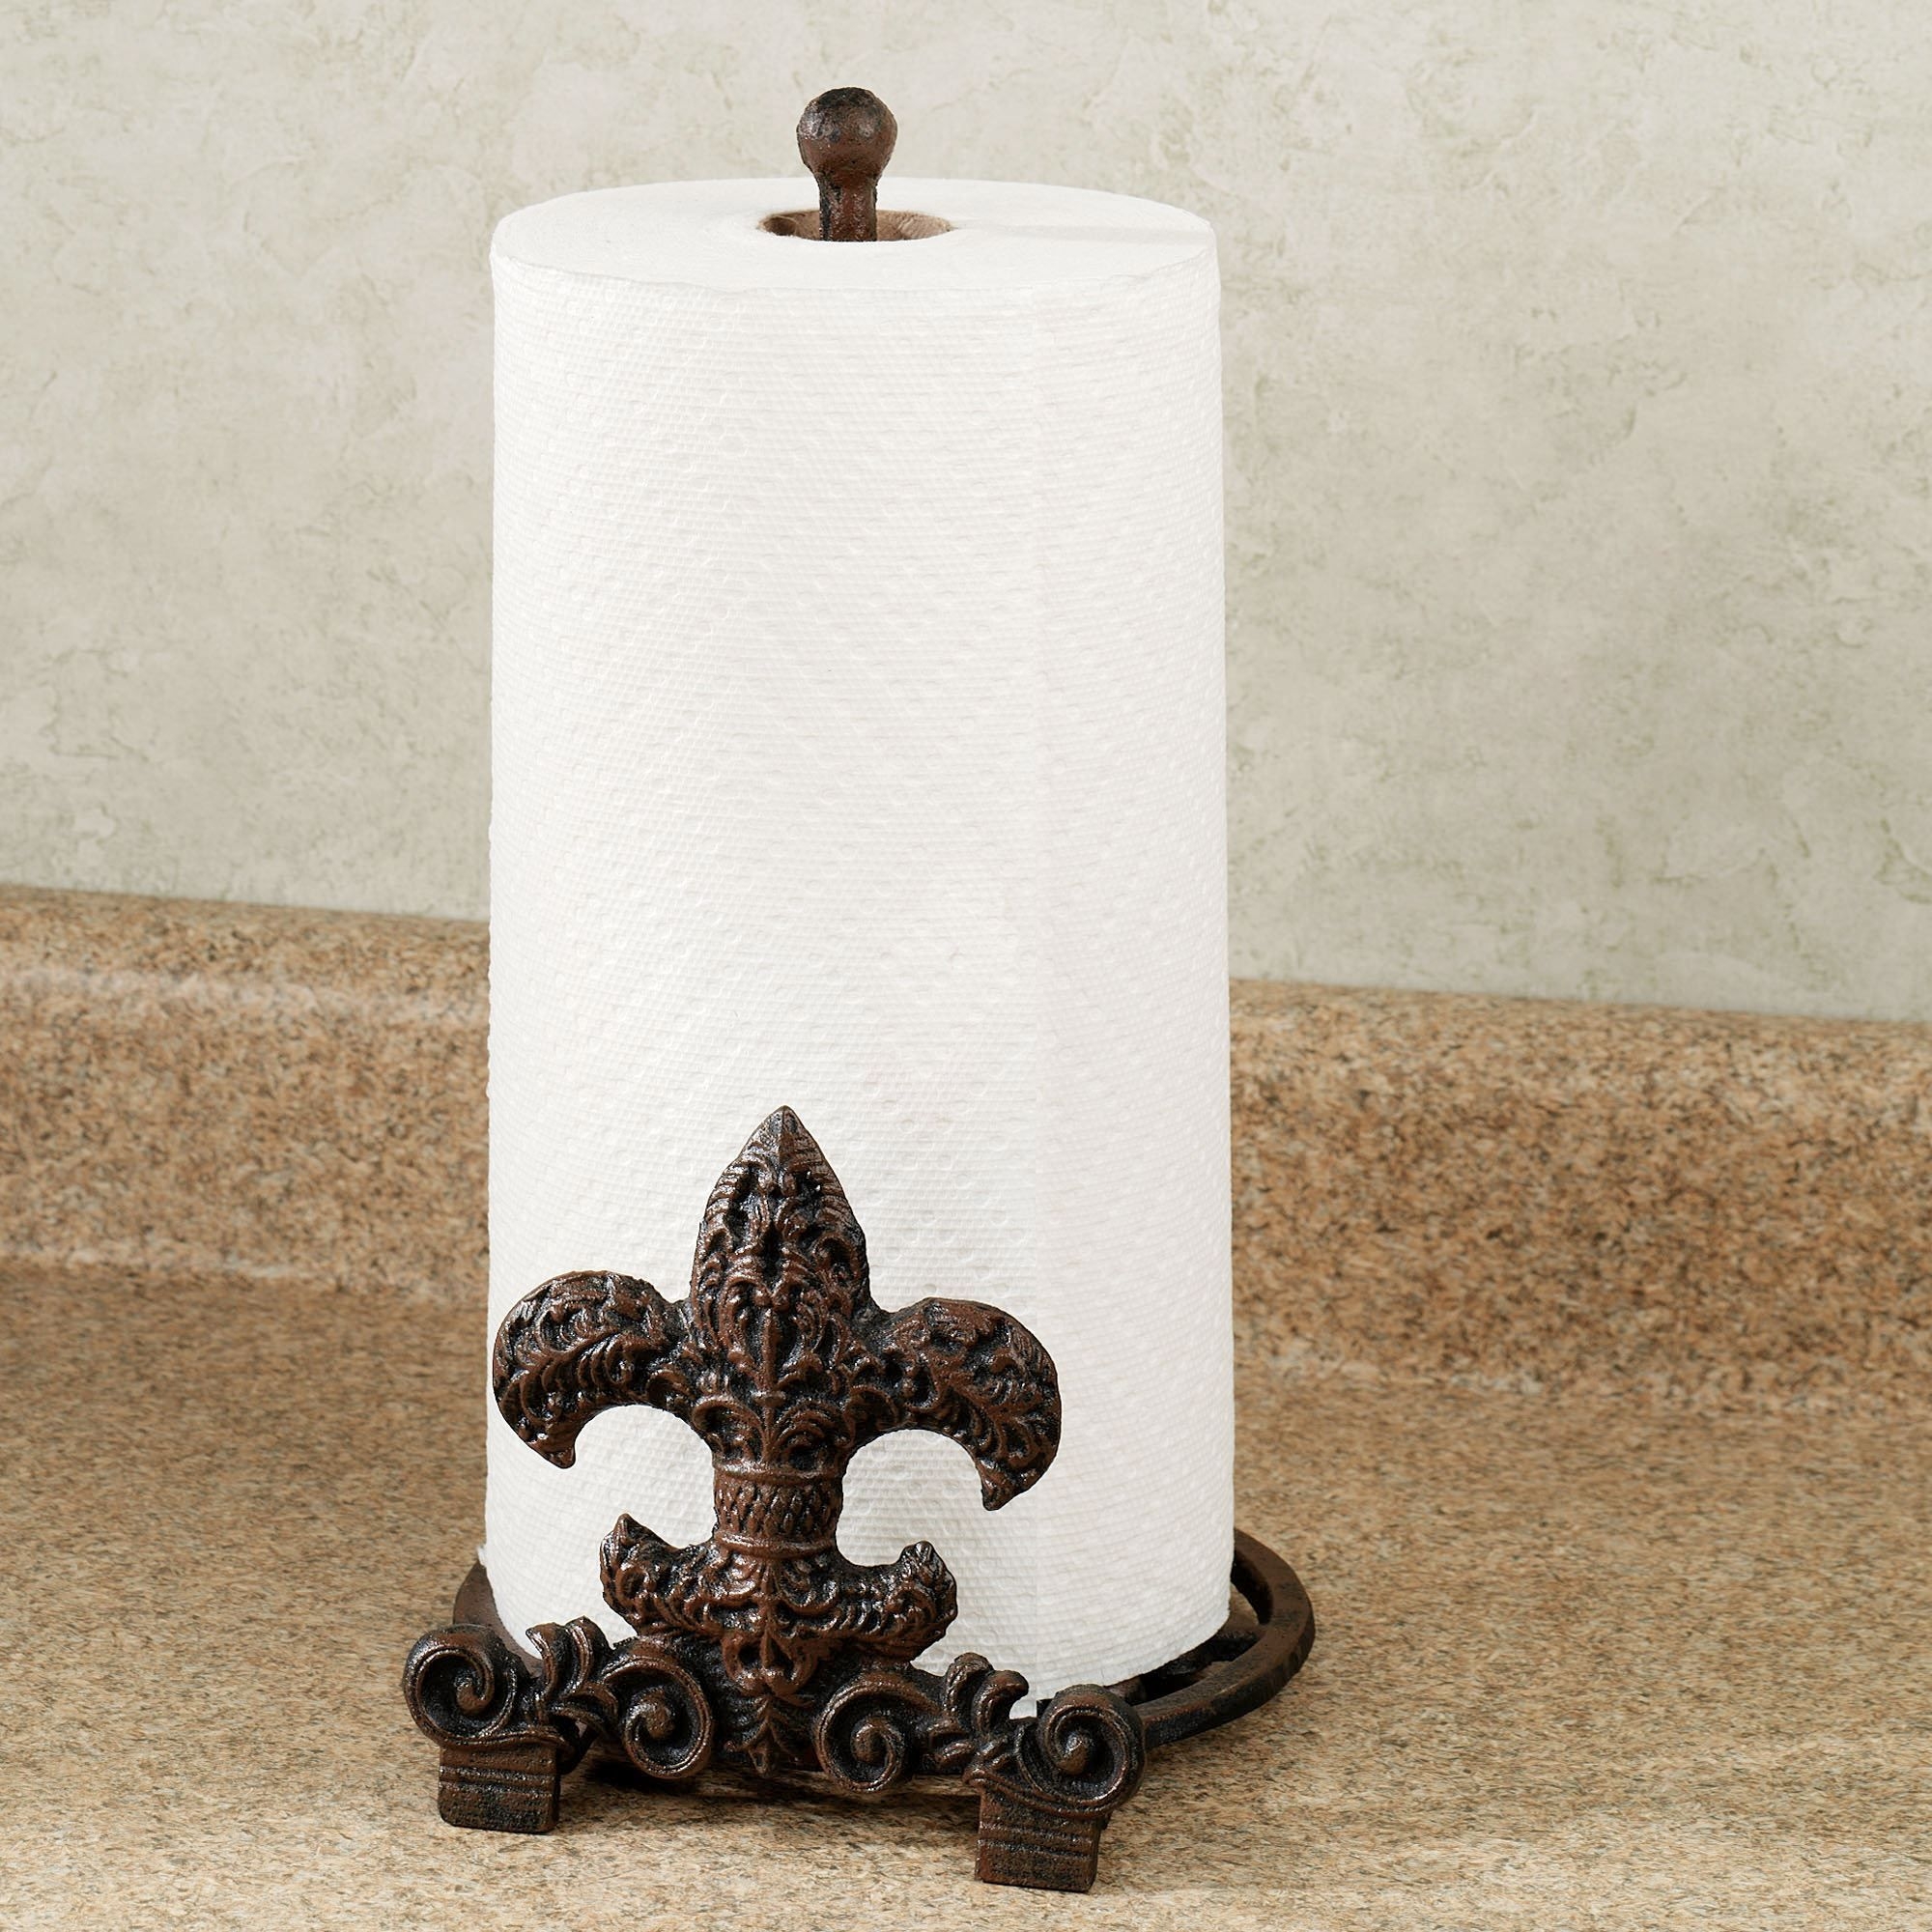 You might also consider fleur de lis paper towel holder